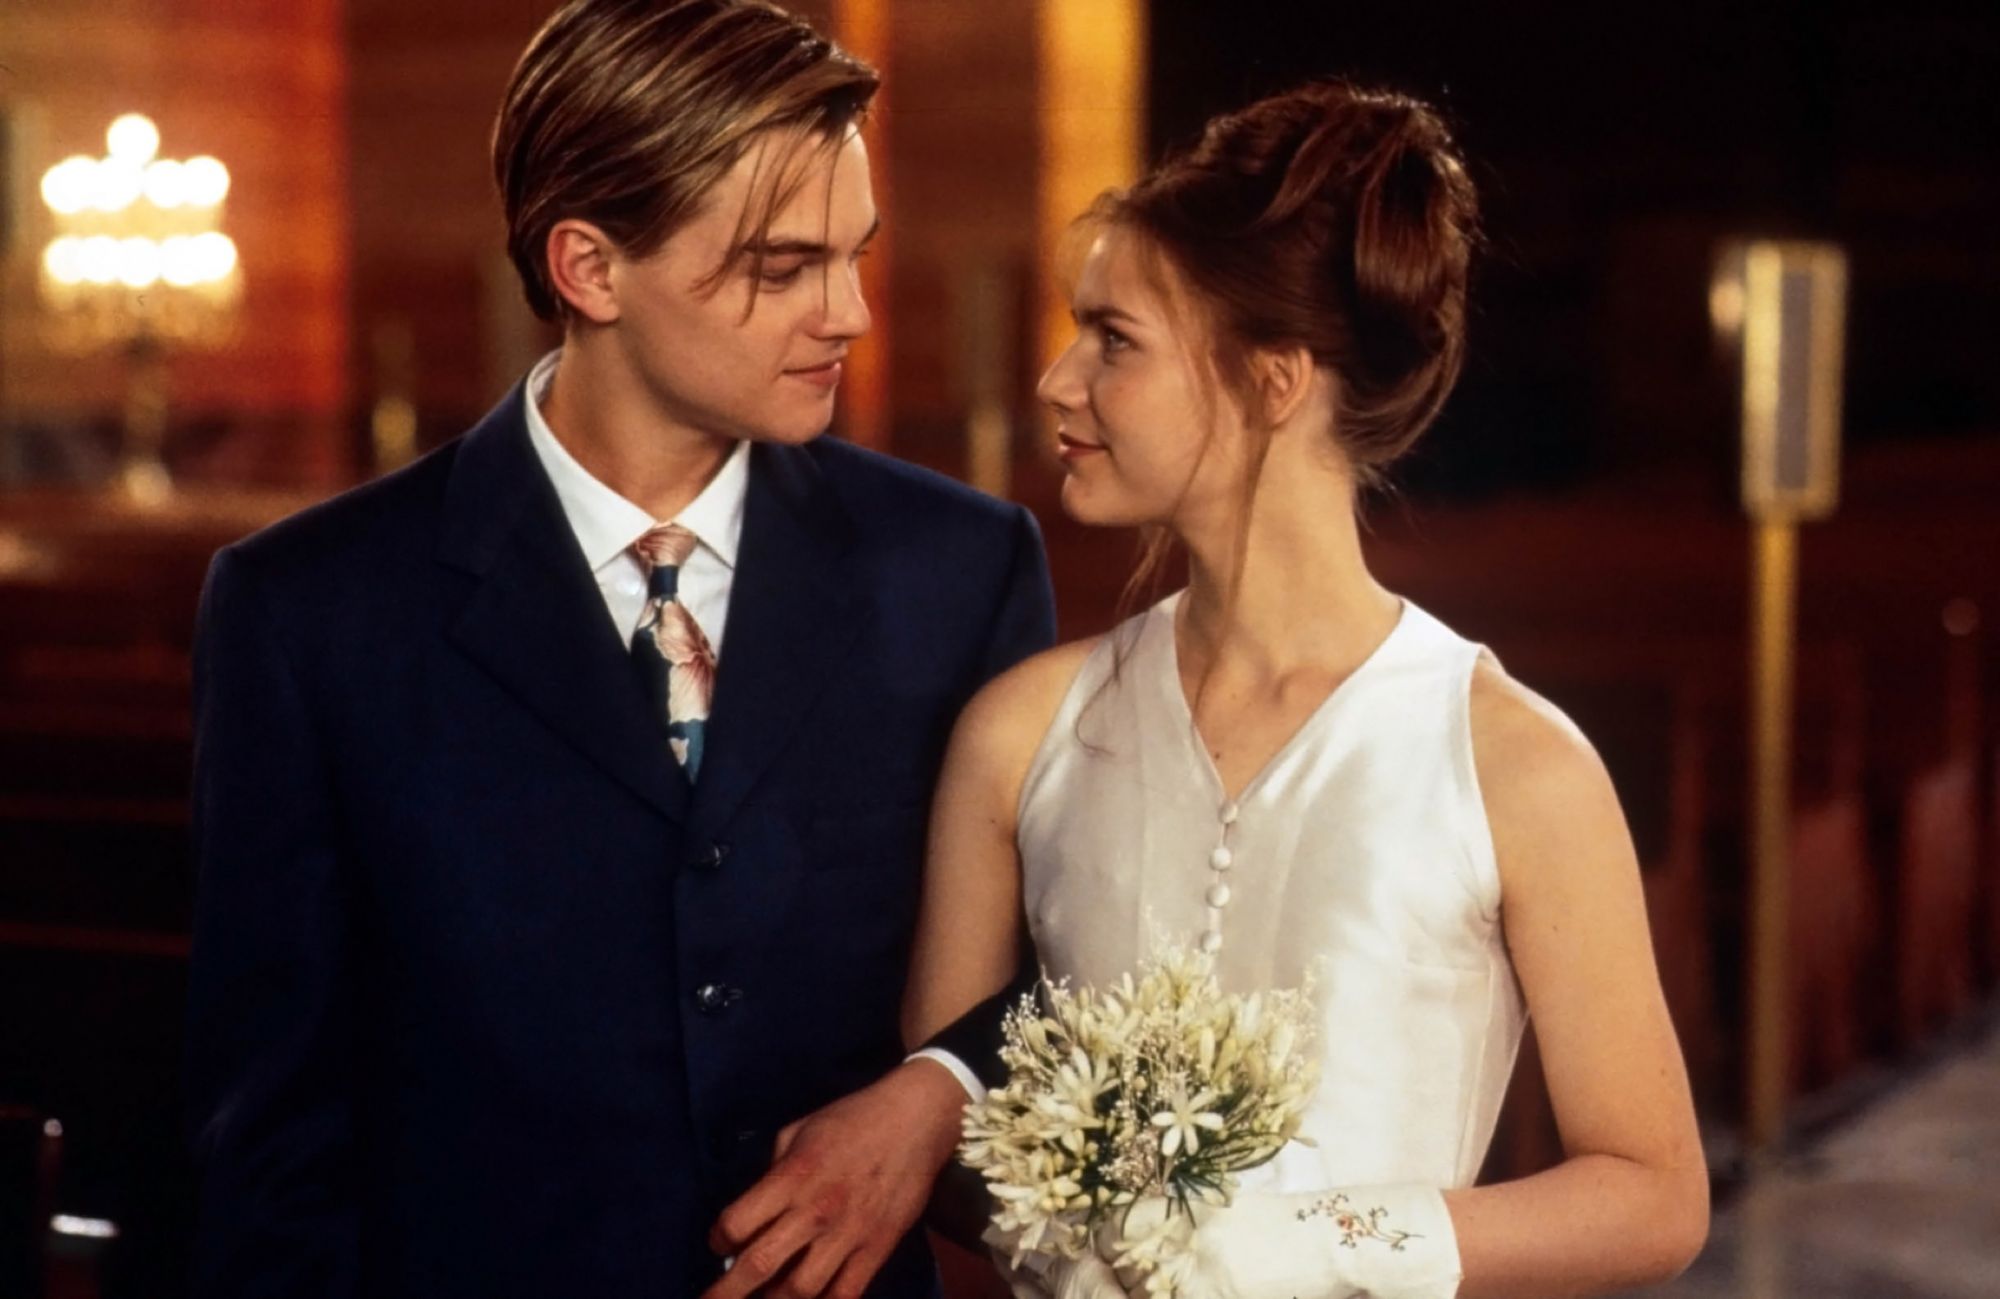 Wedding-scene-from-Romeo-and-Juliet-movie